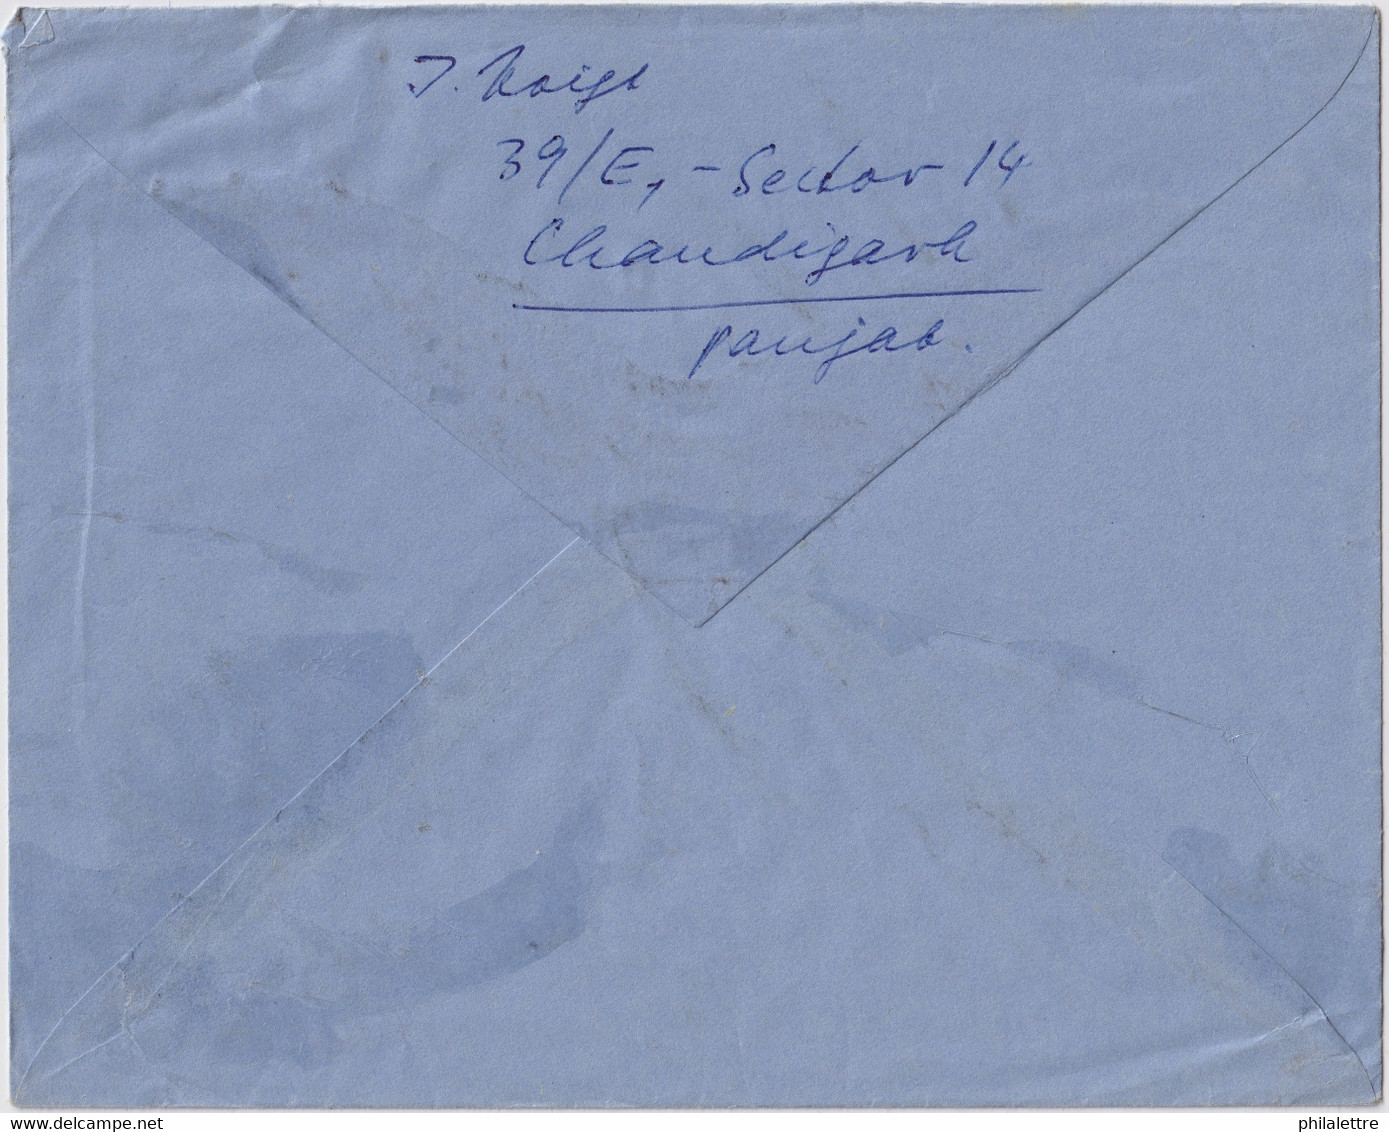 INDE / INDIA - 1962 - Air Mail Postal Envelope From CHANDIGARH To Kiel, Germany - Luchtpostbladen